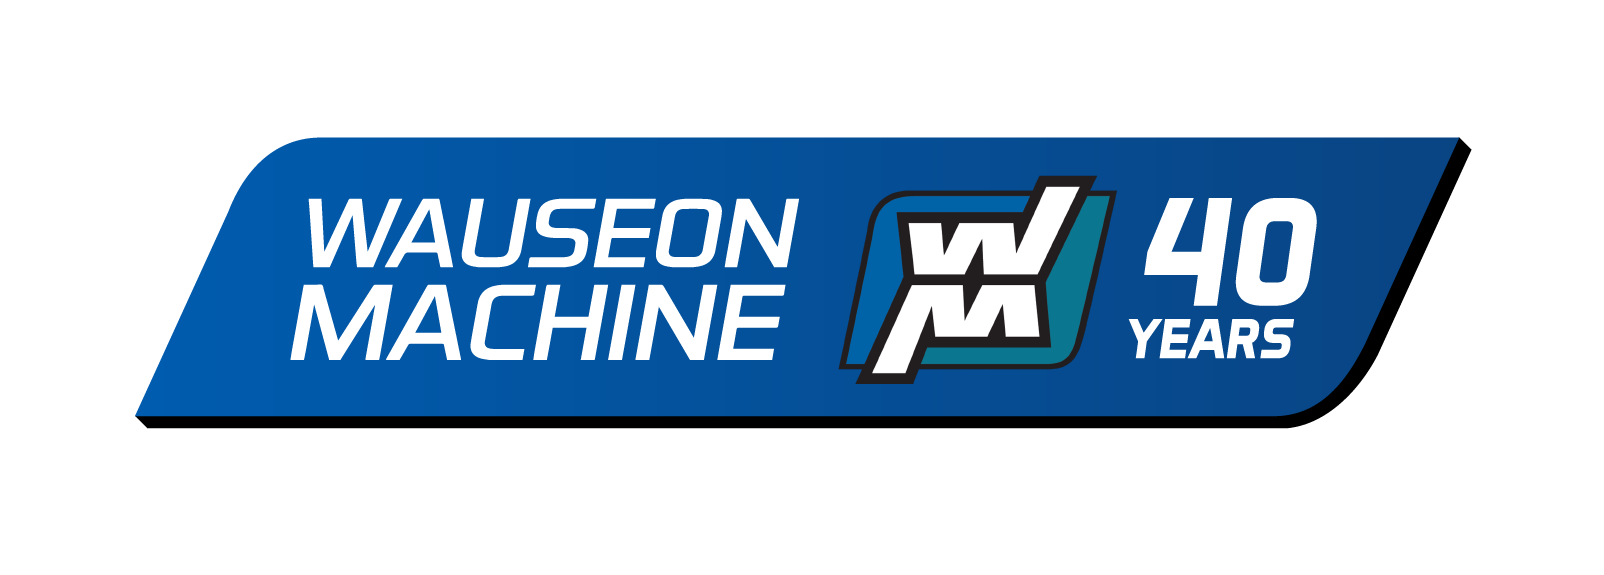 Wauseon Machine - 40 years